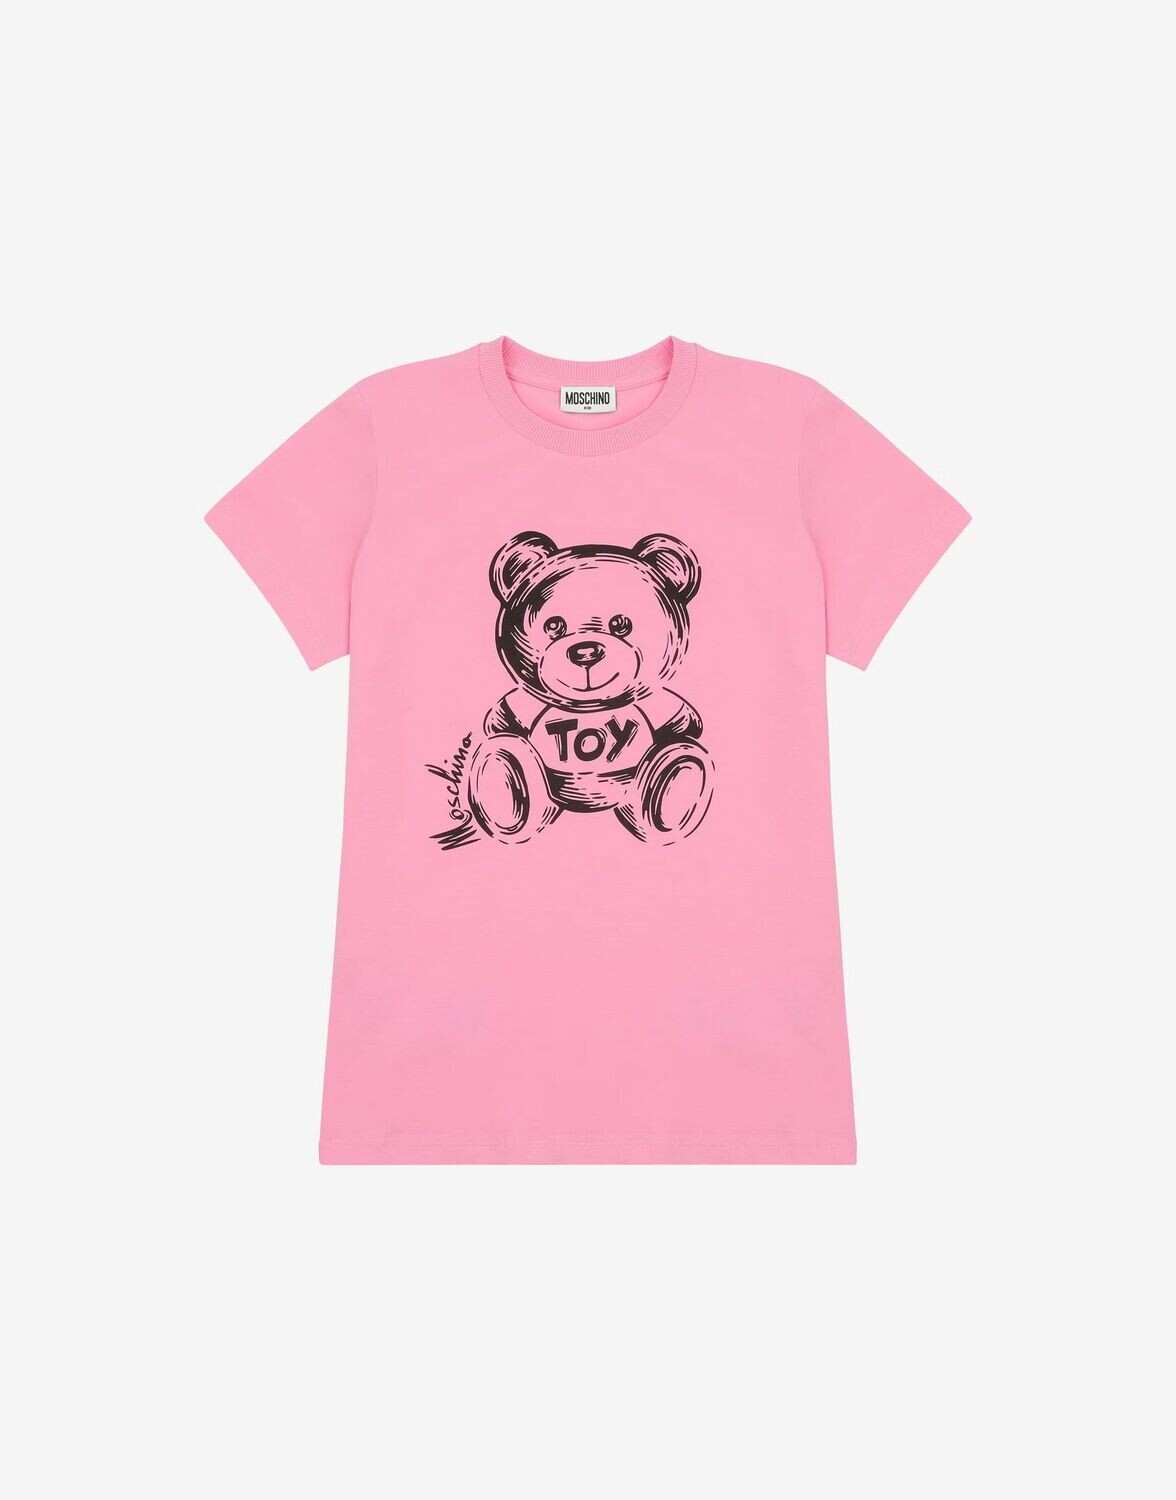 Moschino - T-shirt rosa Teddy, Size: 4 anni